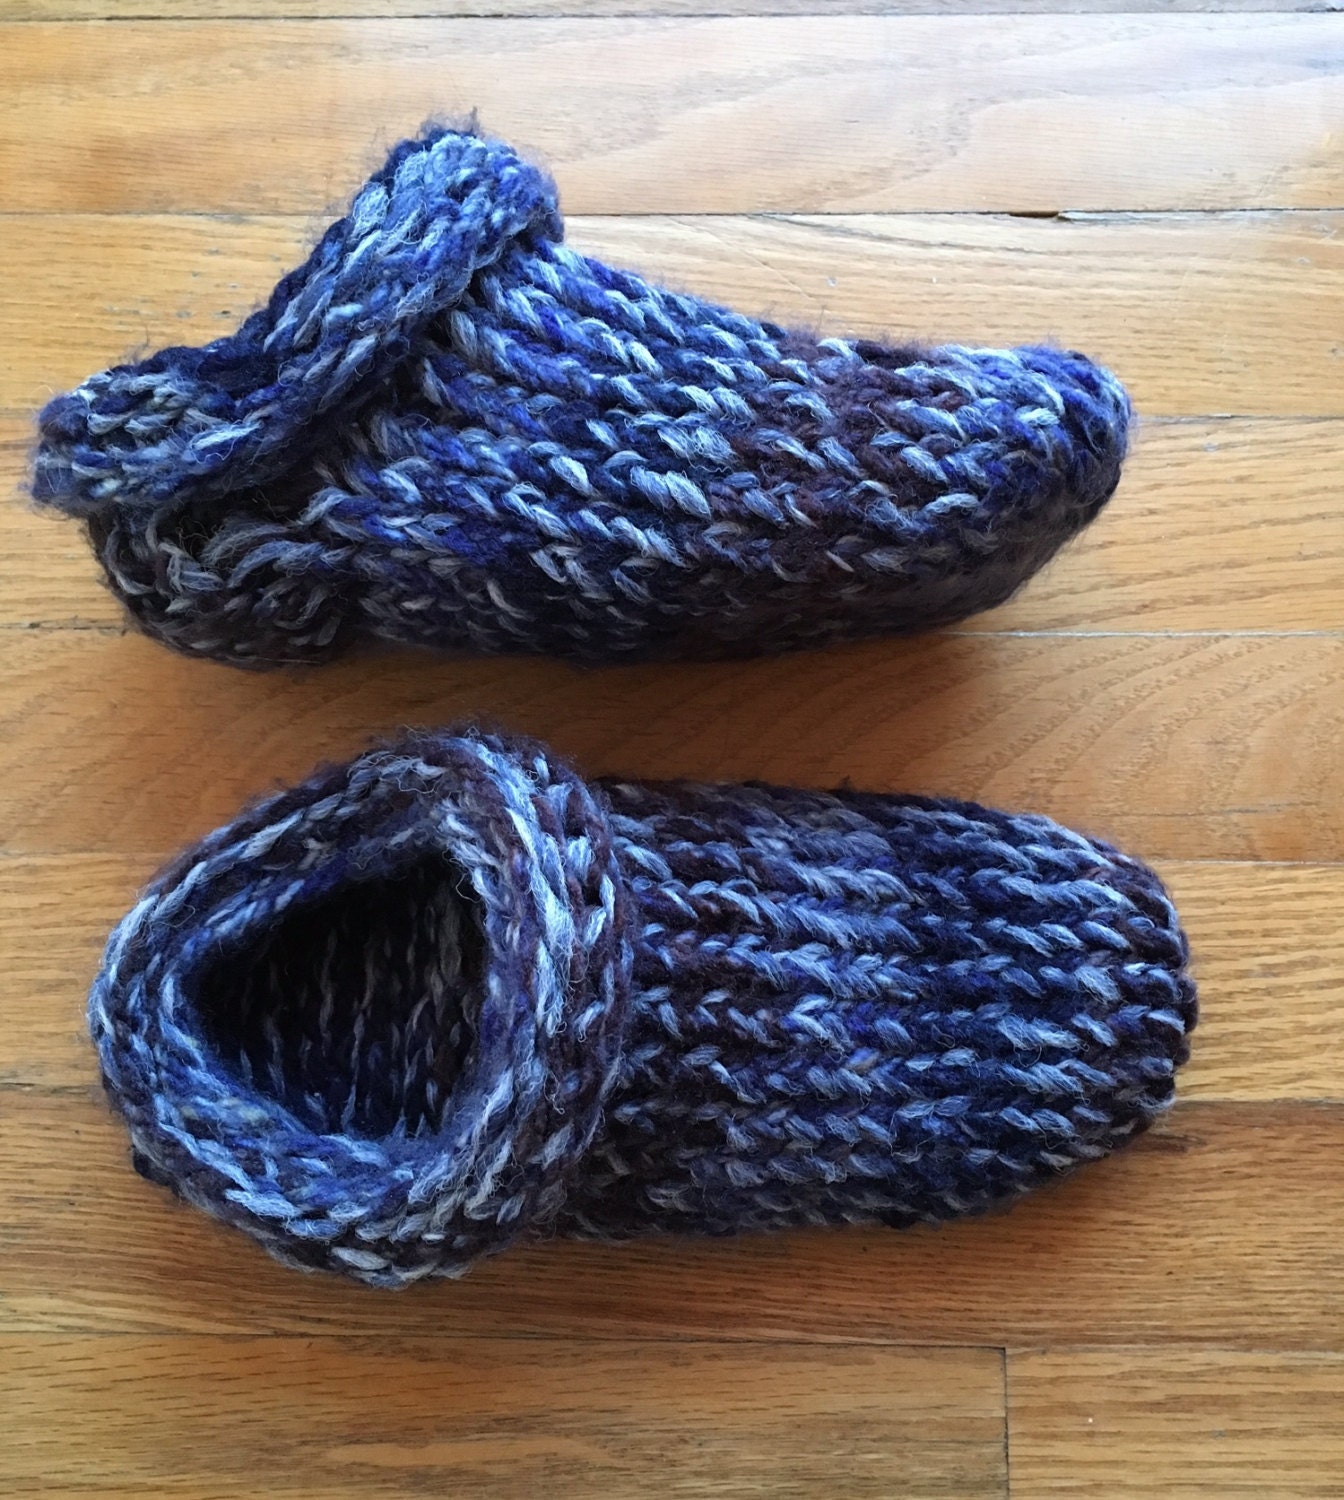 Clog Slippers - a loom knit pattern